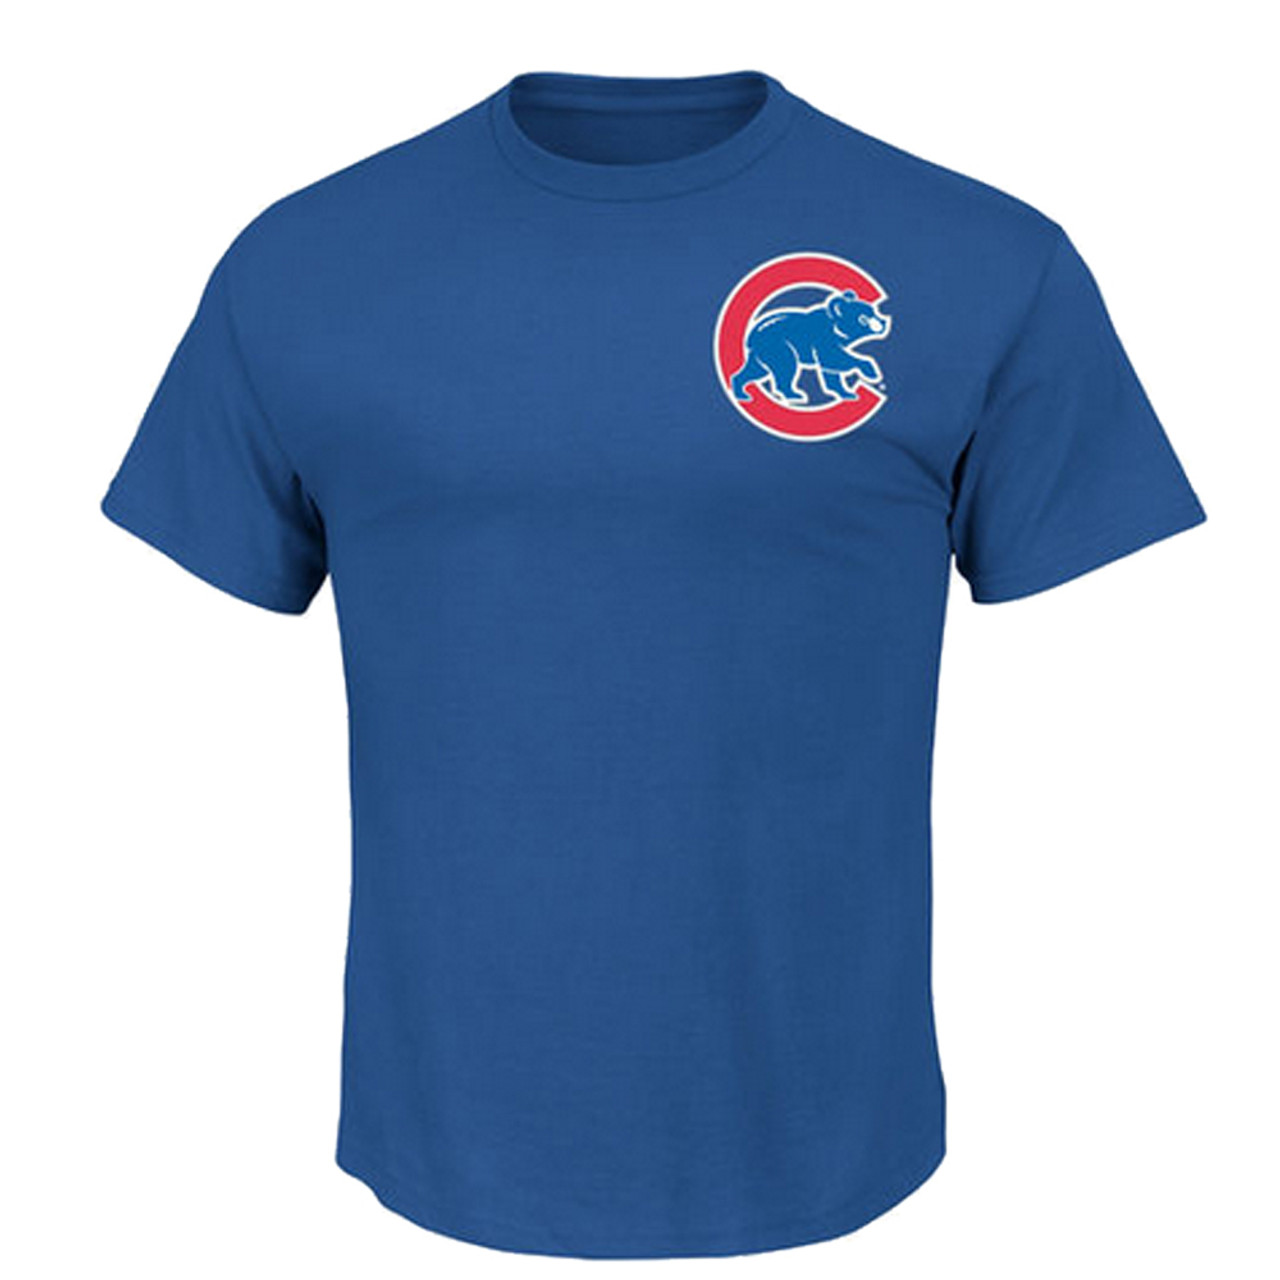  Majestic Chicago Cubs T-shirt (Adult XXX-Large